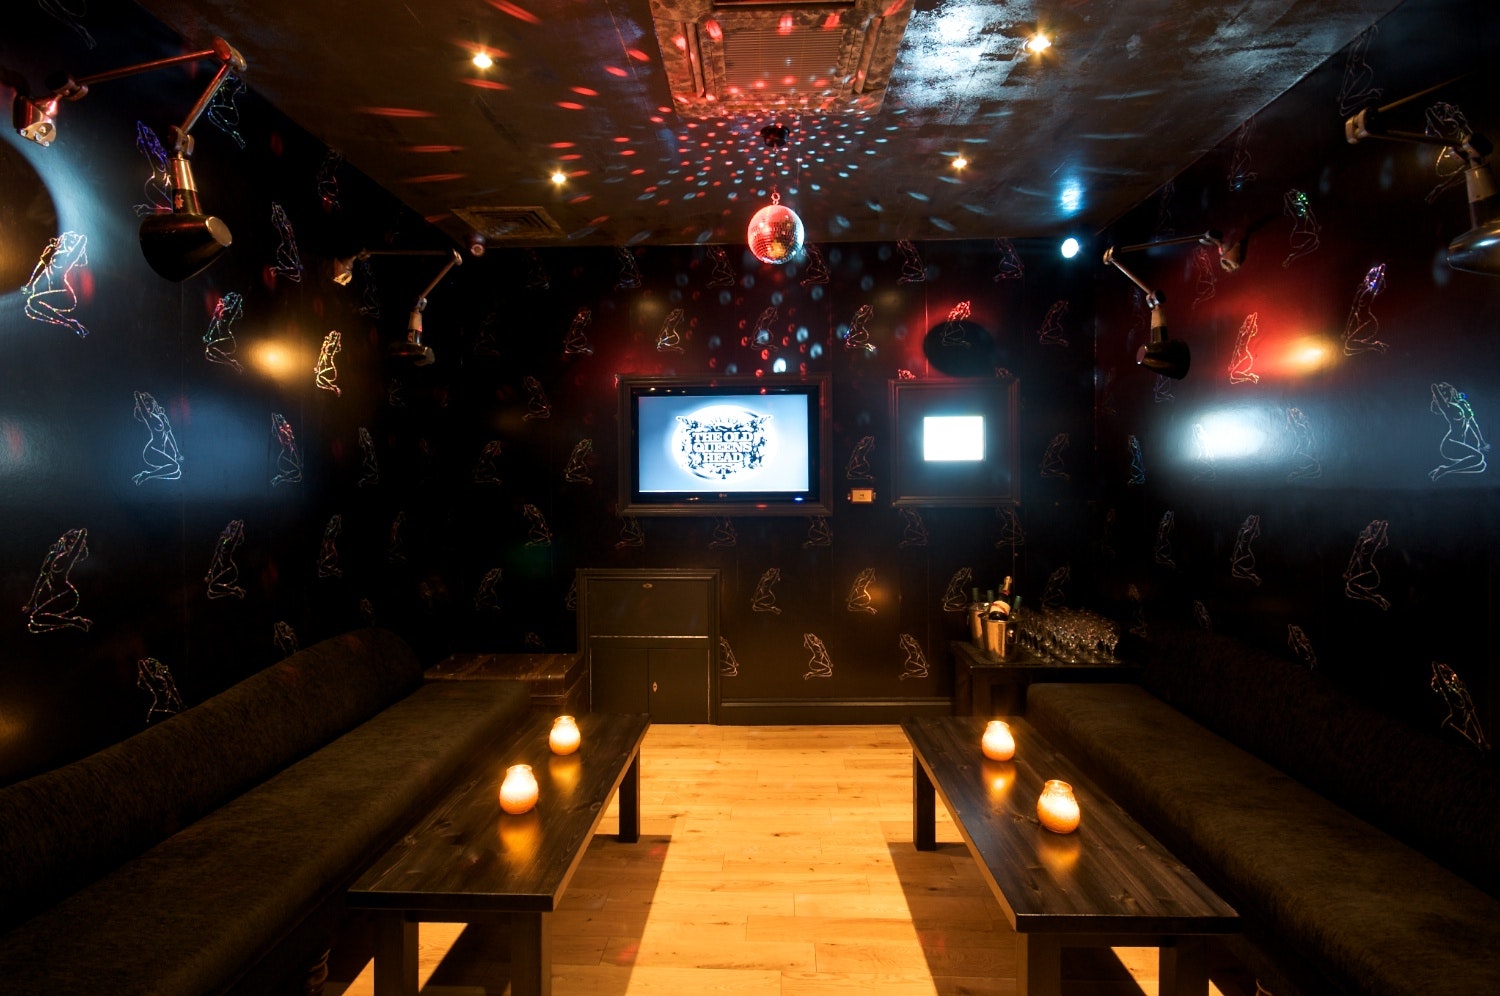 Karaoke Bars Venues in West London - The Old Queen's Head